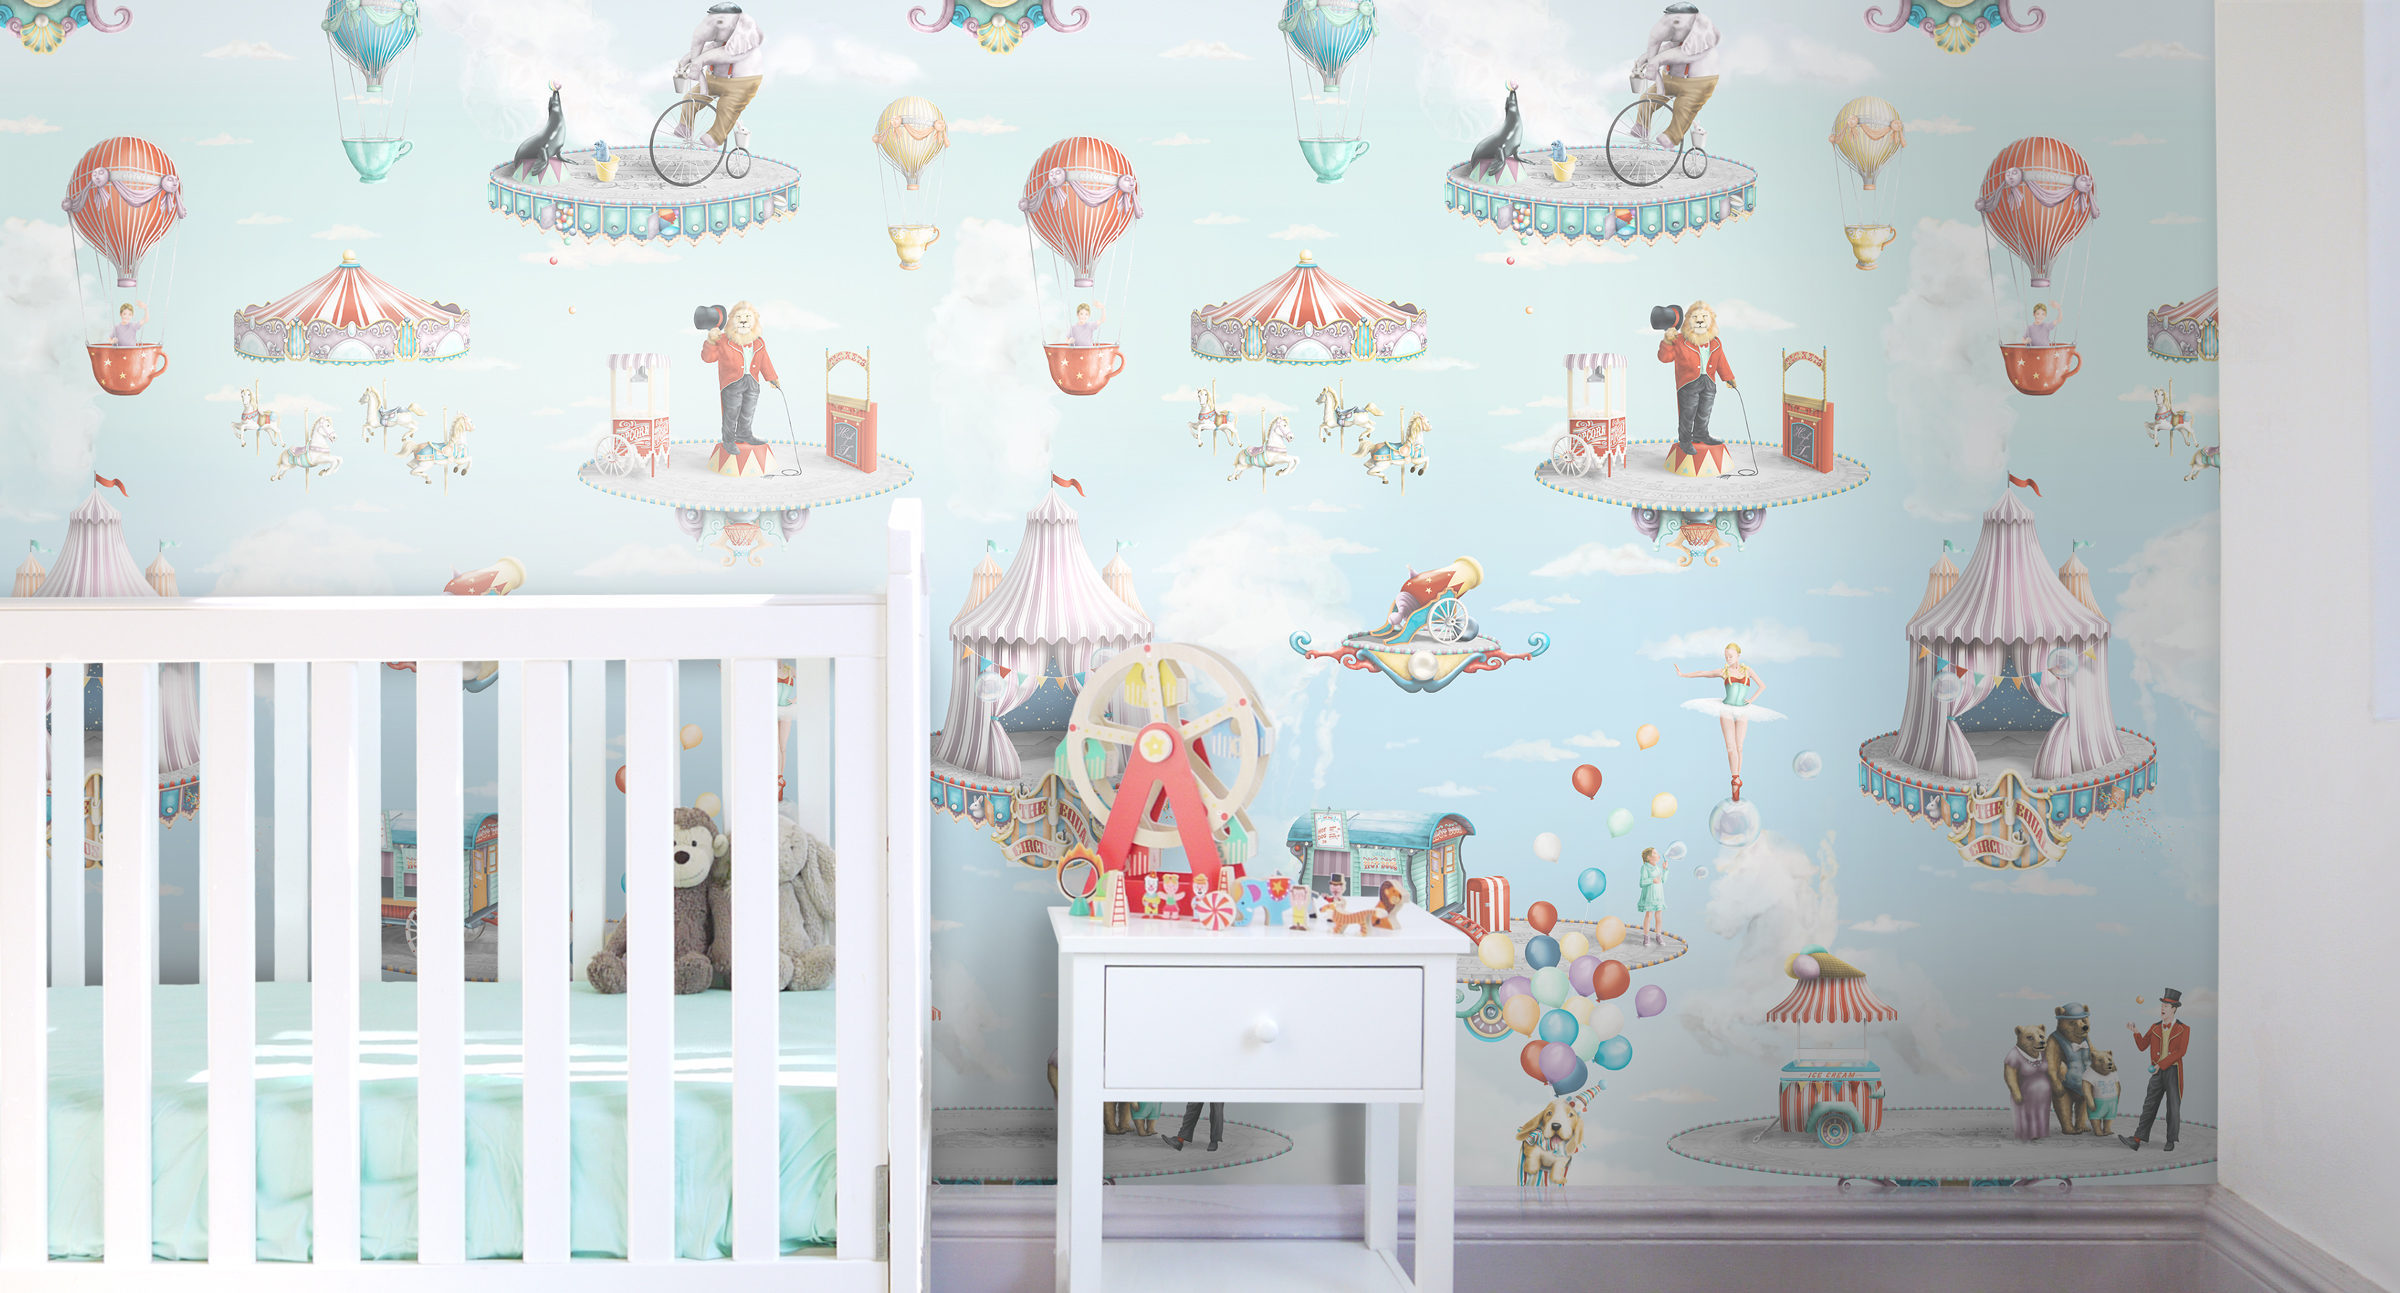 Kids Circus Wallpaper Wall mural for nursery or bedroom